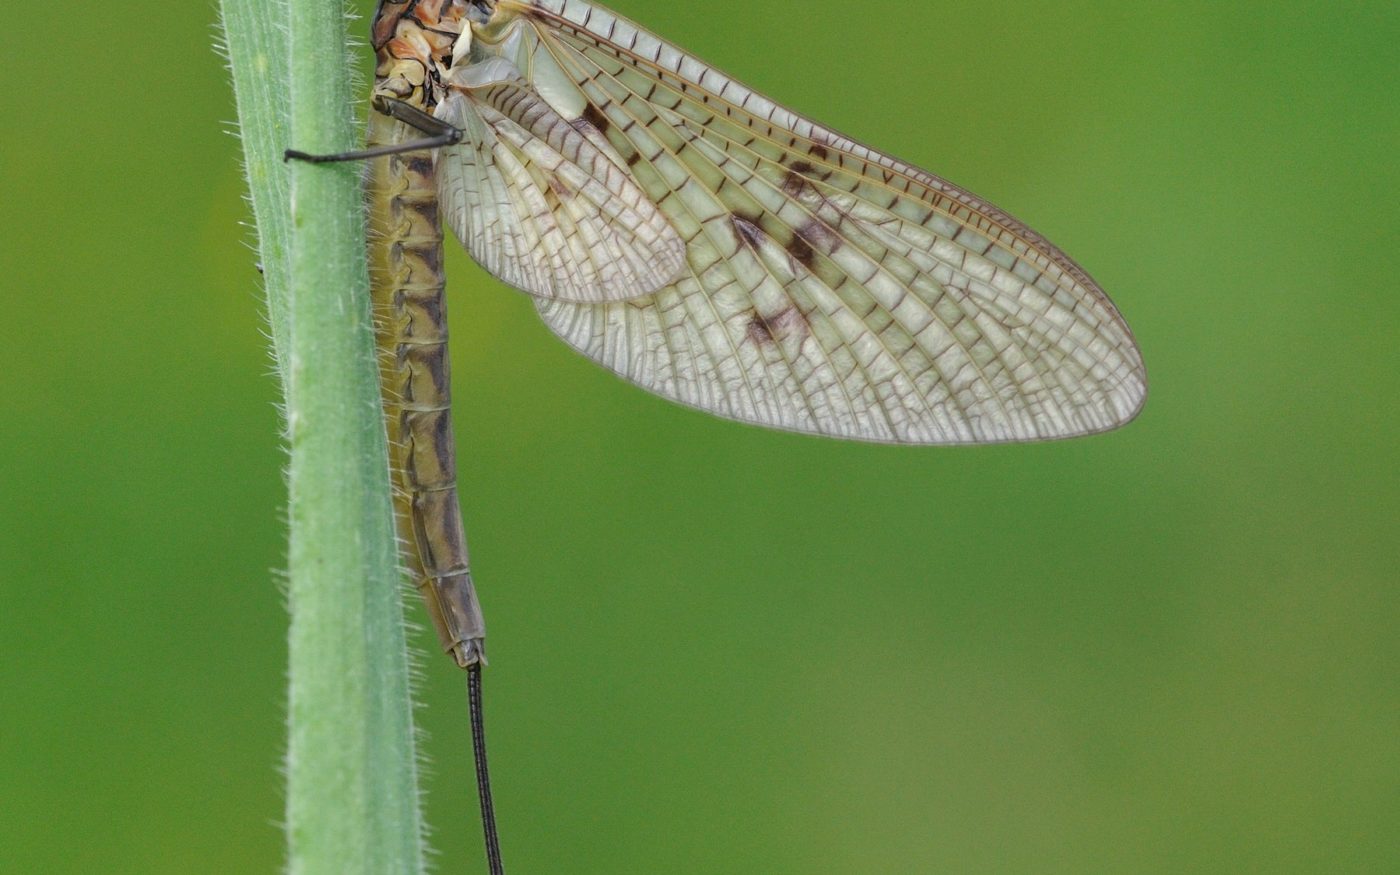 Mayfly on a green plant stalk